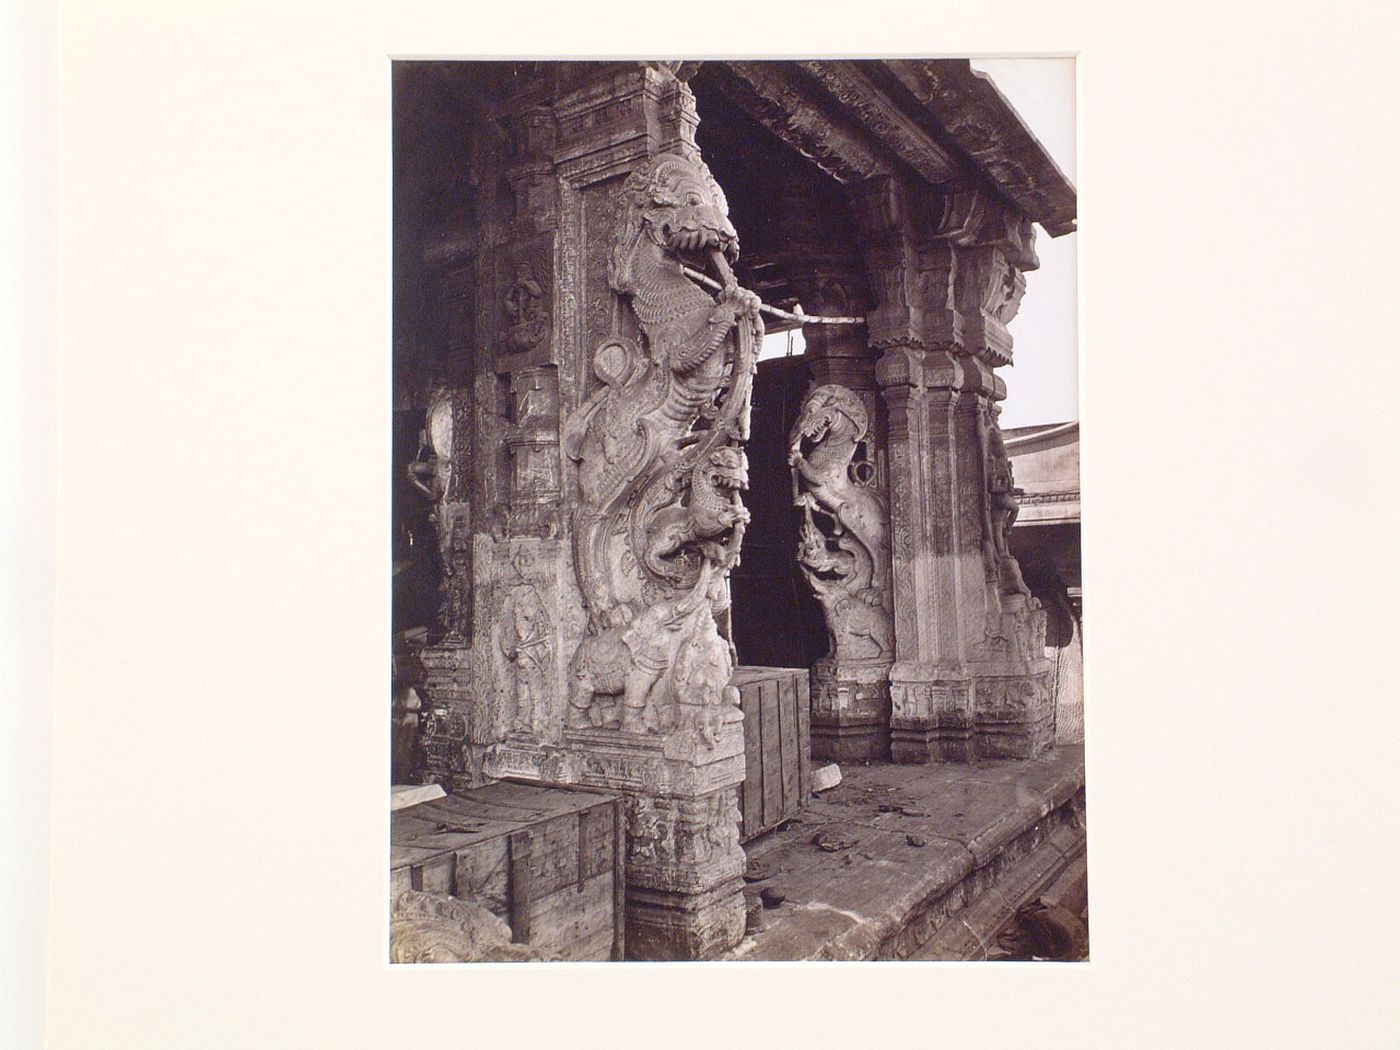 Interior view of the Pudu Mandapa (also known as Thirumalai Nayak's Choultrie) showing sculptures and columns, Minakshi sundaresvara Temple, Madura (now Madurai), India